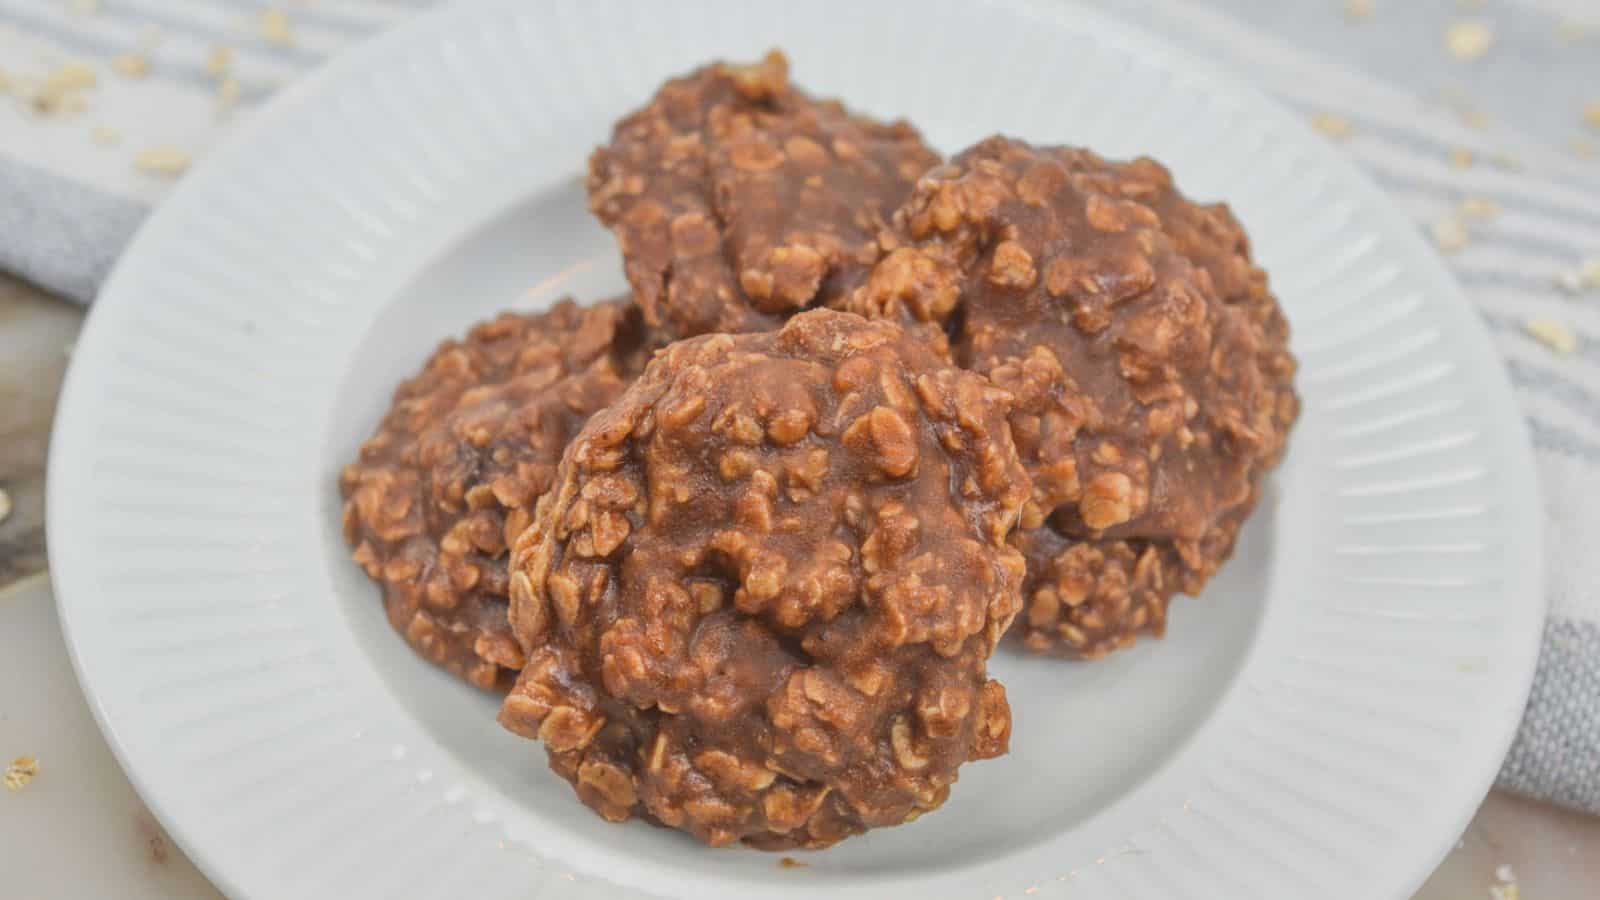 Chocolate oatmeal no-bake cookies on a white plate.